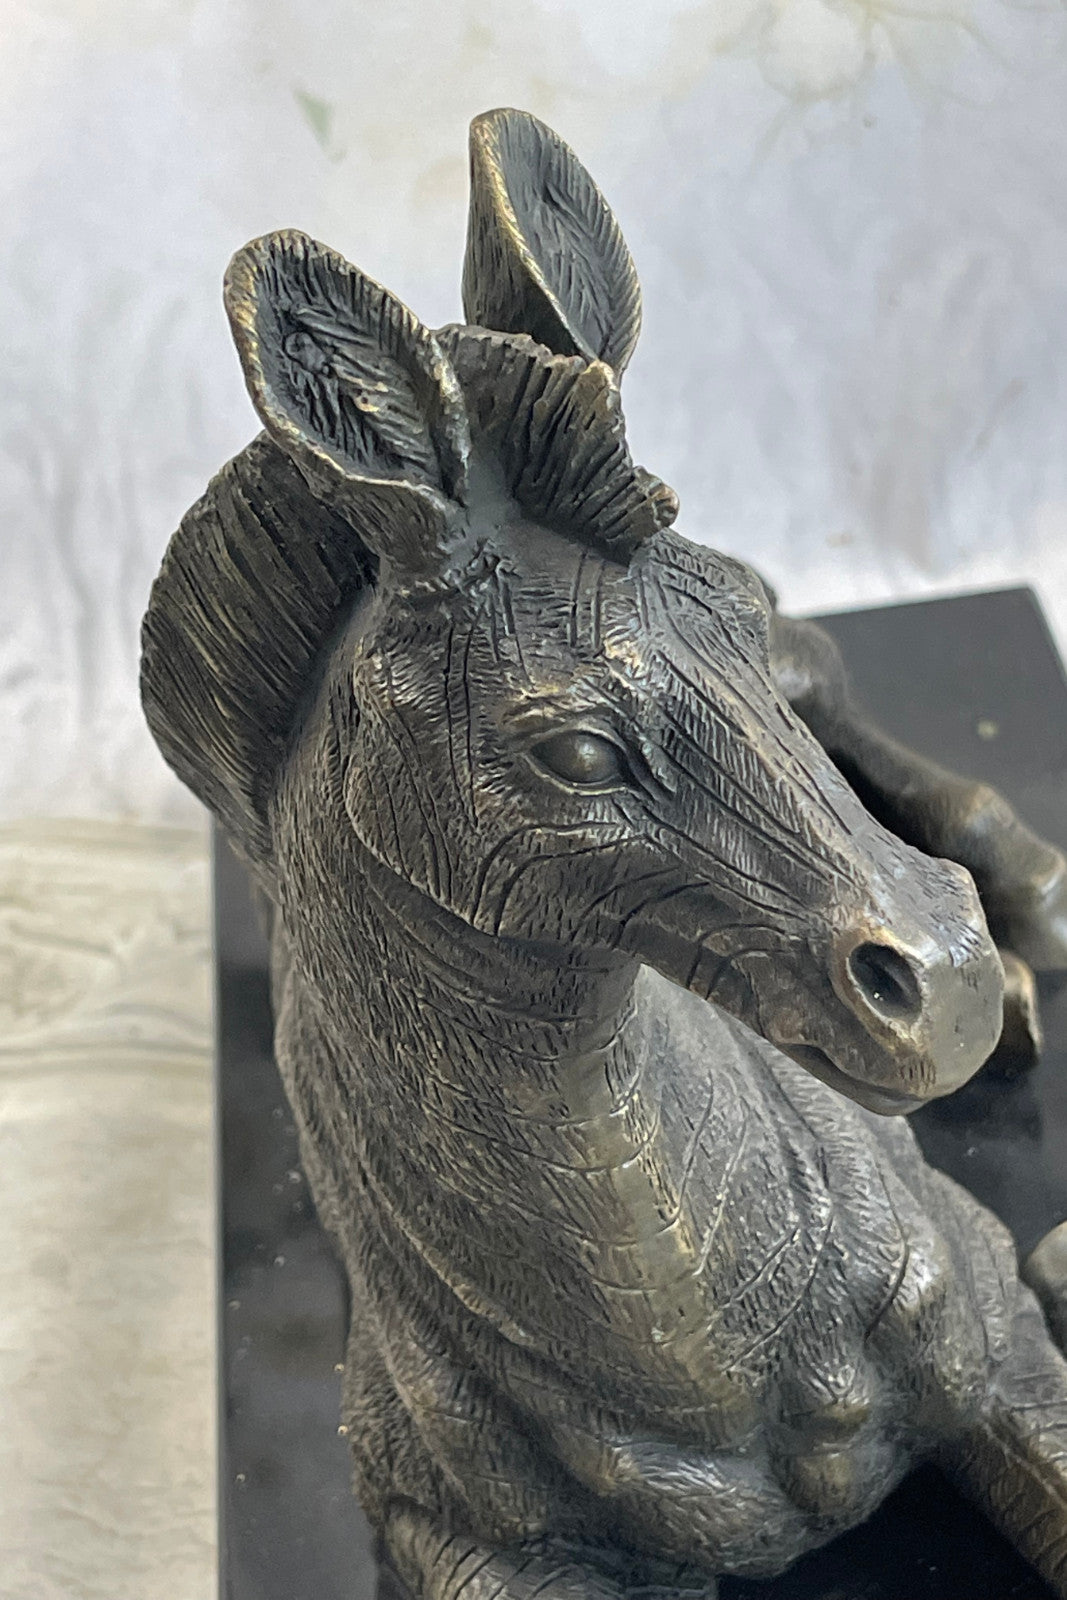 Handcrafted bronze sculpture SALE Decor Base Marble Deco Art Zebra African